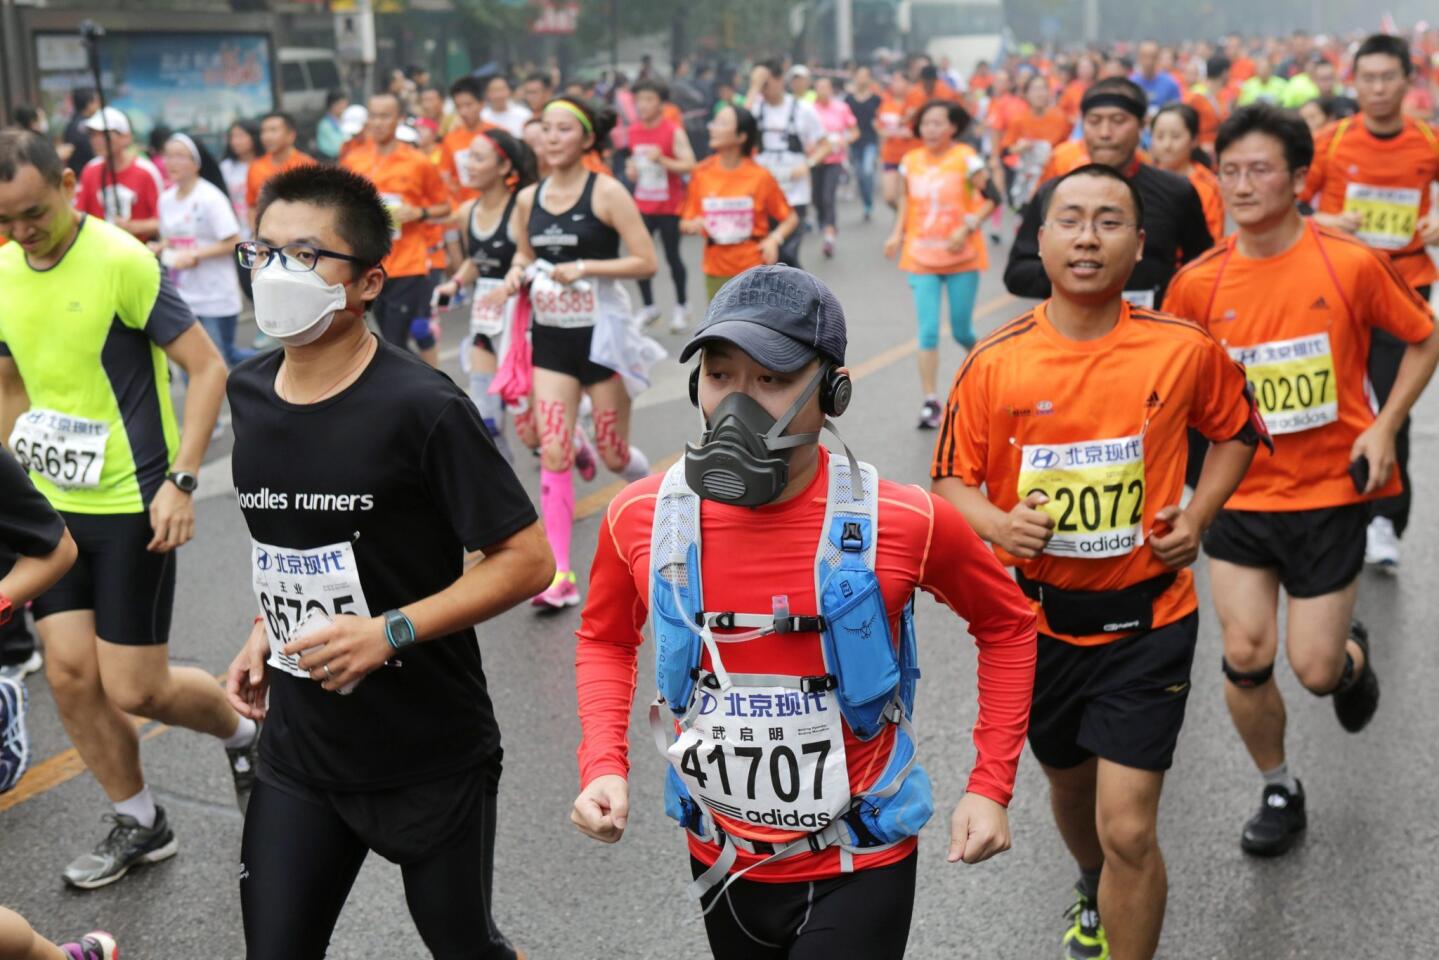 The Beijing marathon